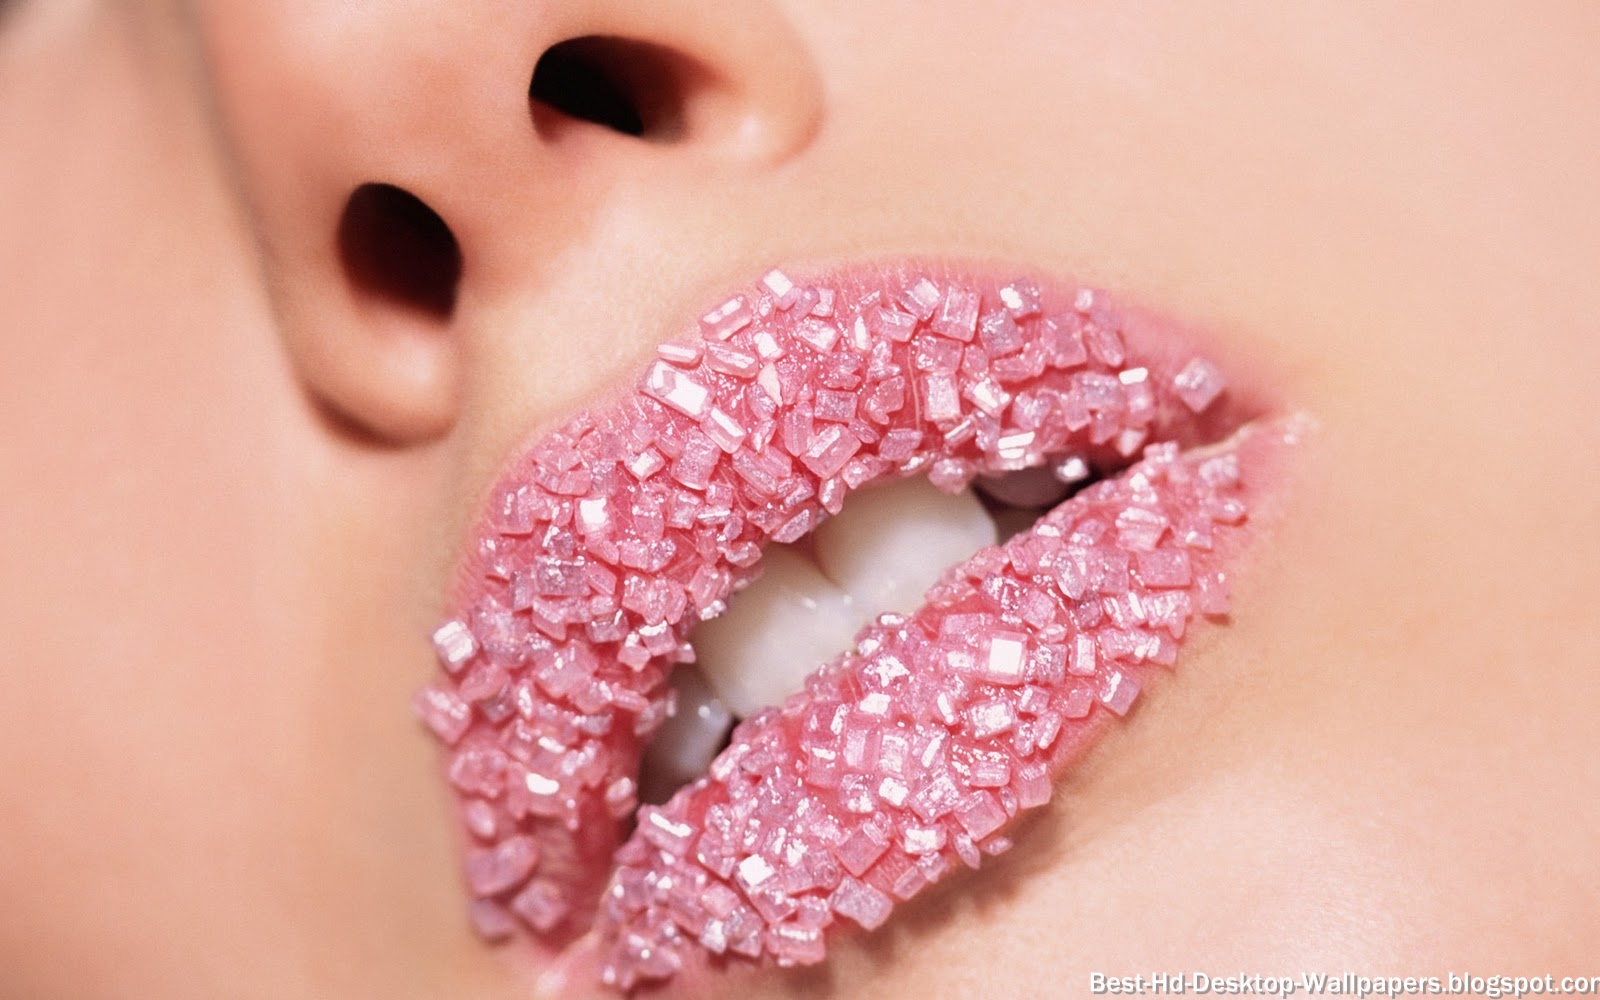 http://3.bp.blogspot.com/-Selyv4EUjw0/UCC7kwds36I/AAAAAAAAEmQ/jODL8g_fJIk/s1600/Best-hd-Desktop-Wallpapers-pink-cute-lips-wallpapers.jpg